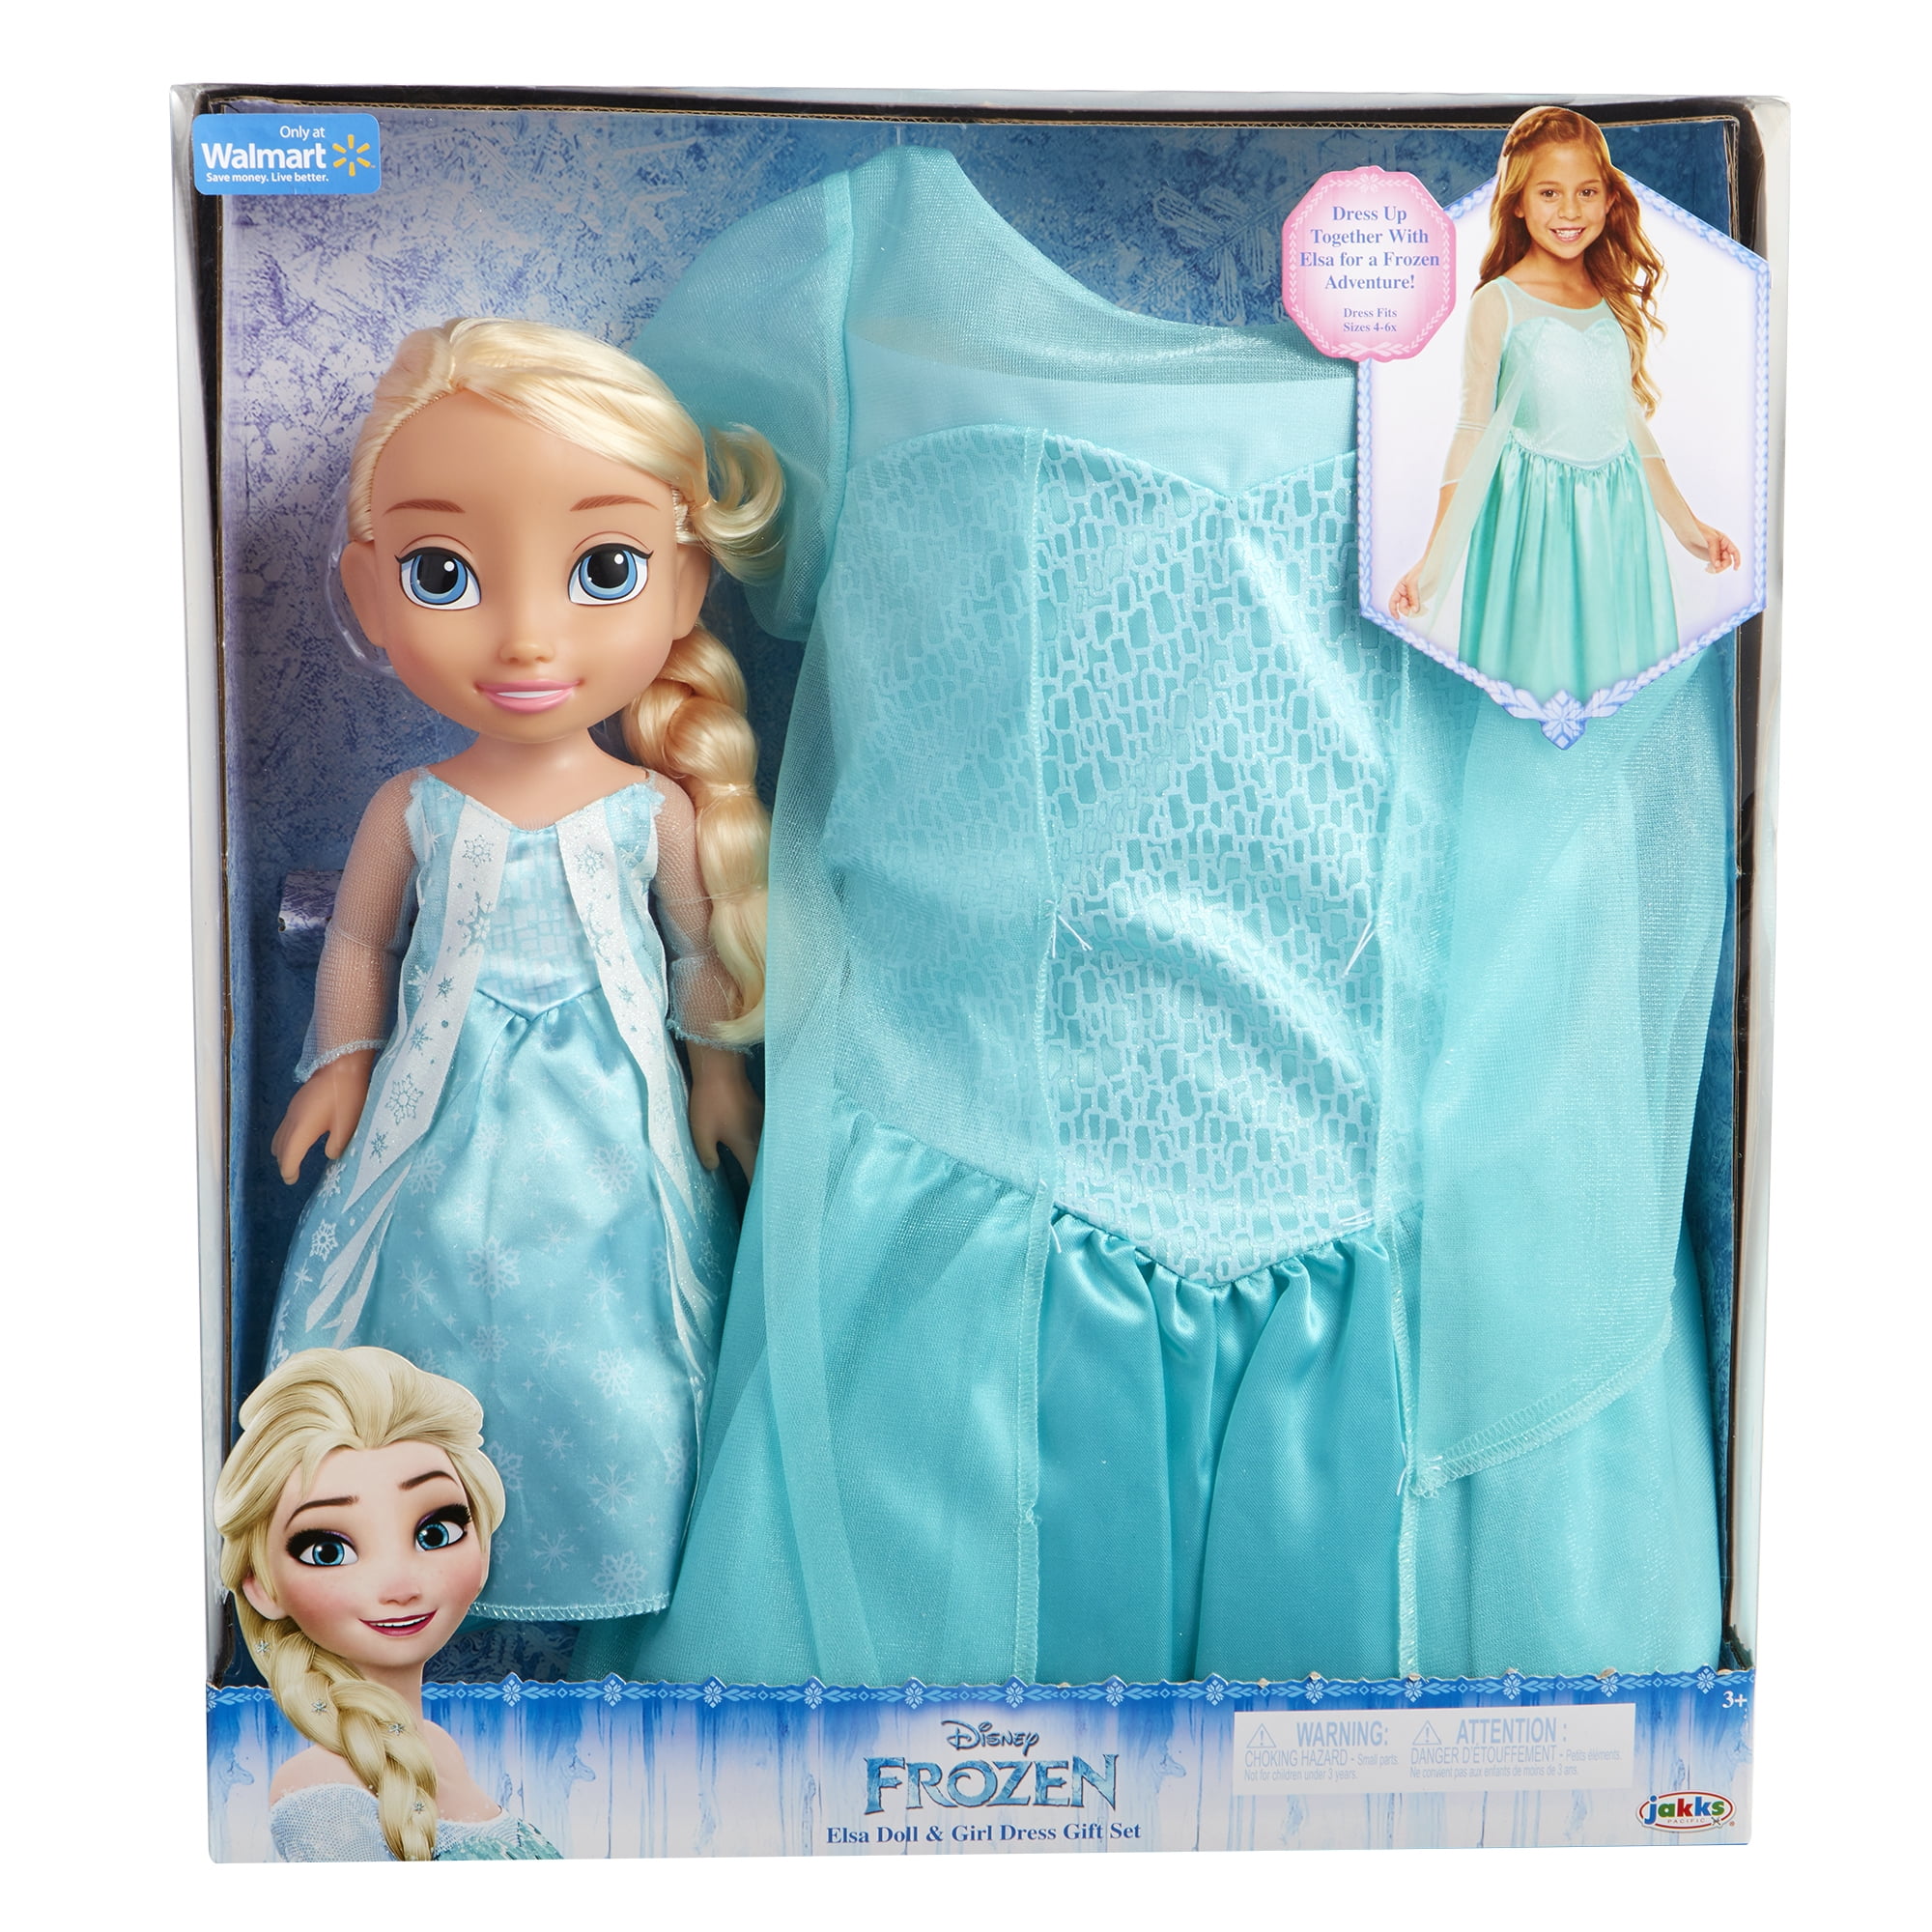 2 x girls toy doll BARBIE FROZEN style dress princess set outfit dresses BC71 